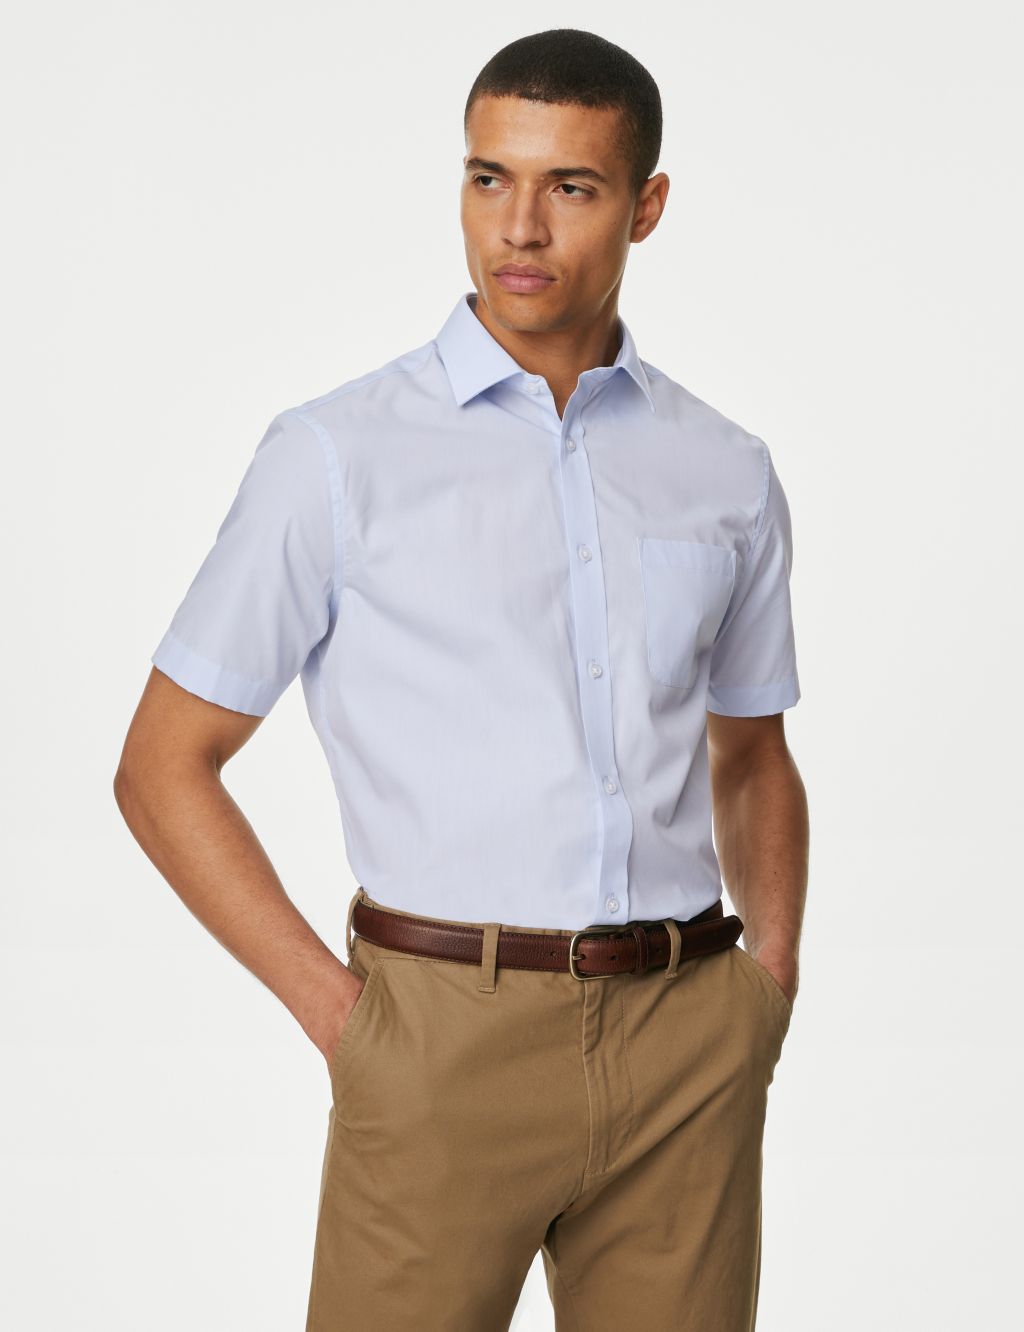 Short-Sleeved Formal Shirts